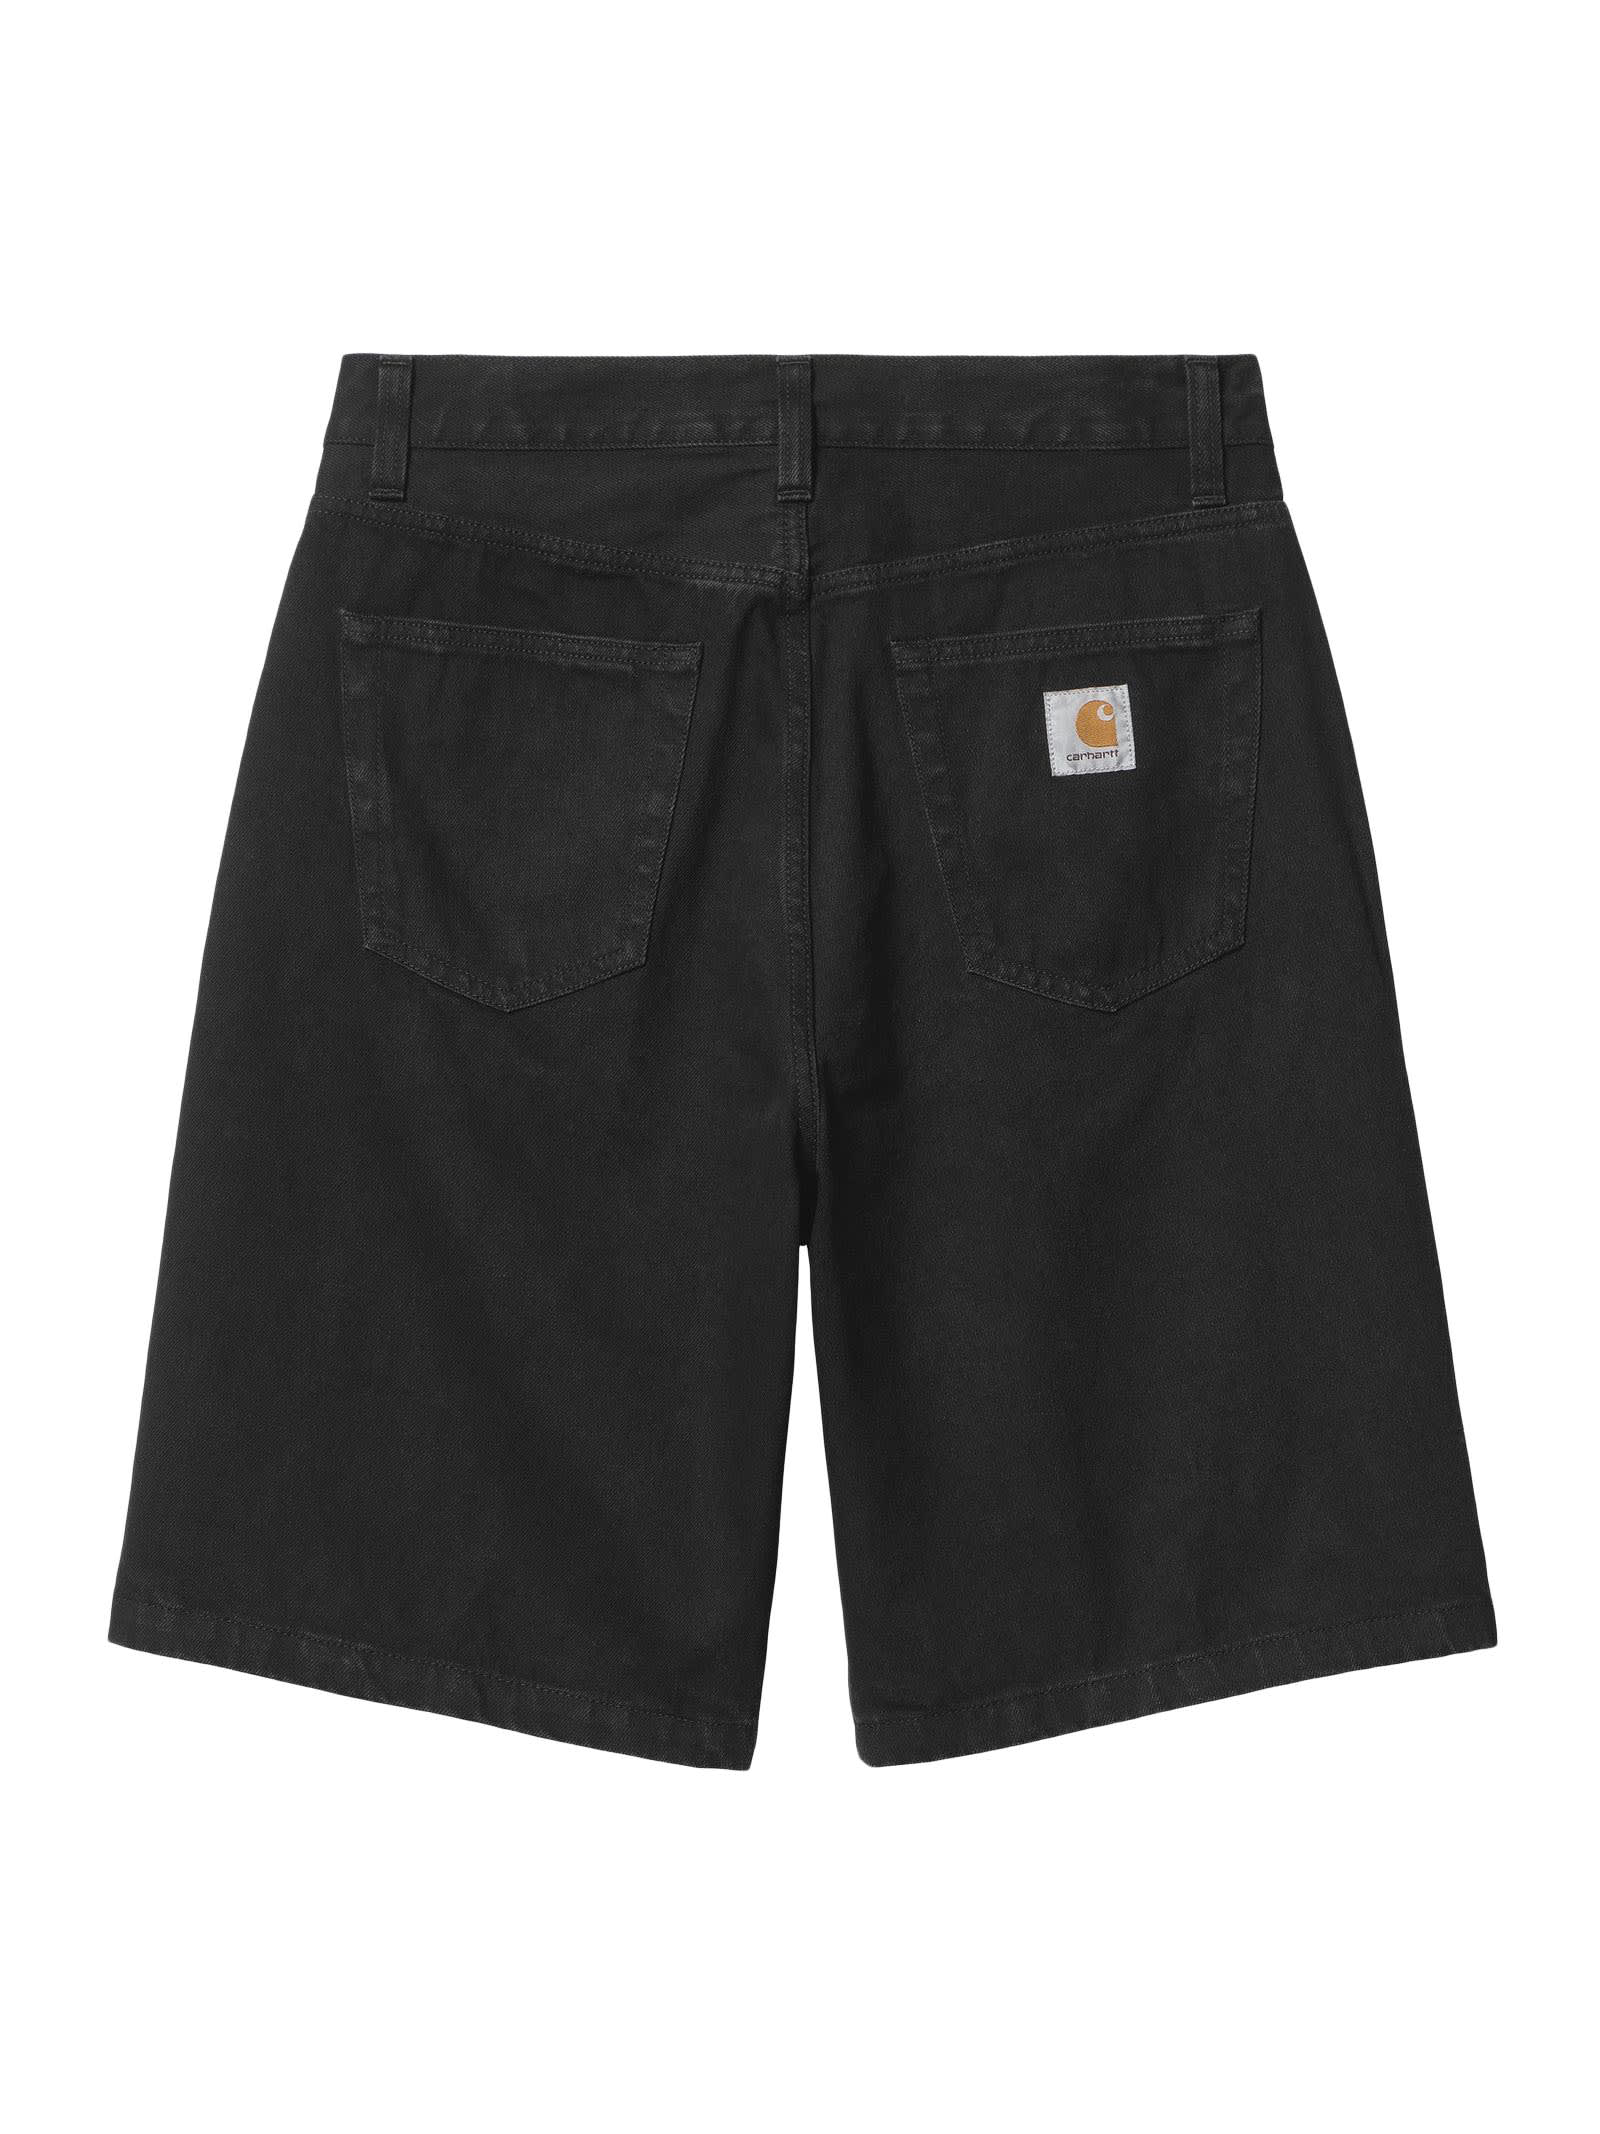 Shop Carhartt Shorts Black